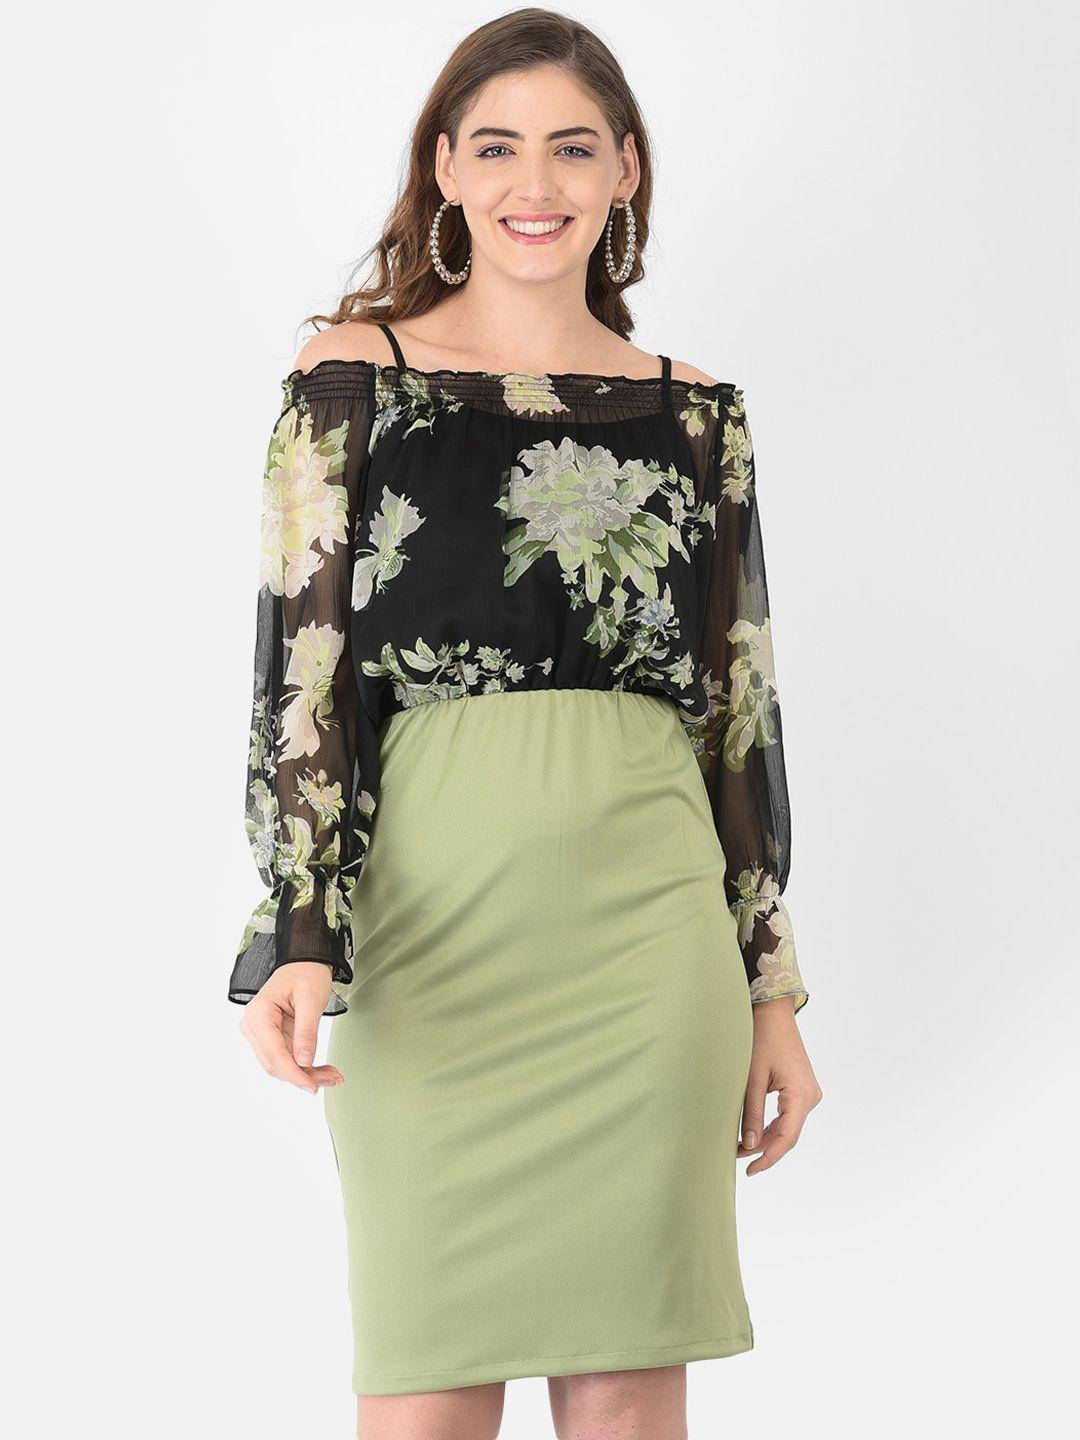 eavan black & green floral off-shoulder chiffon sheath dress